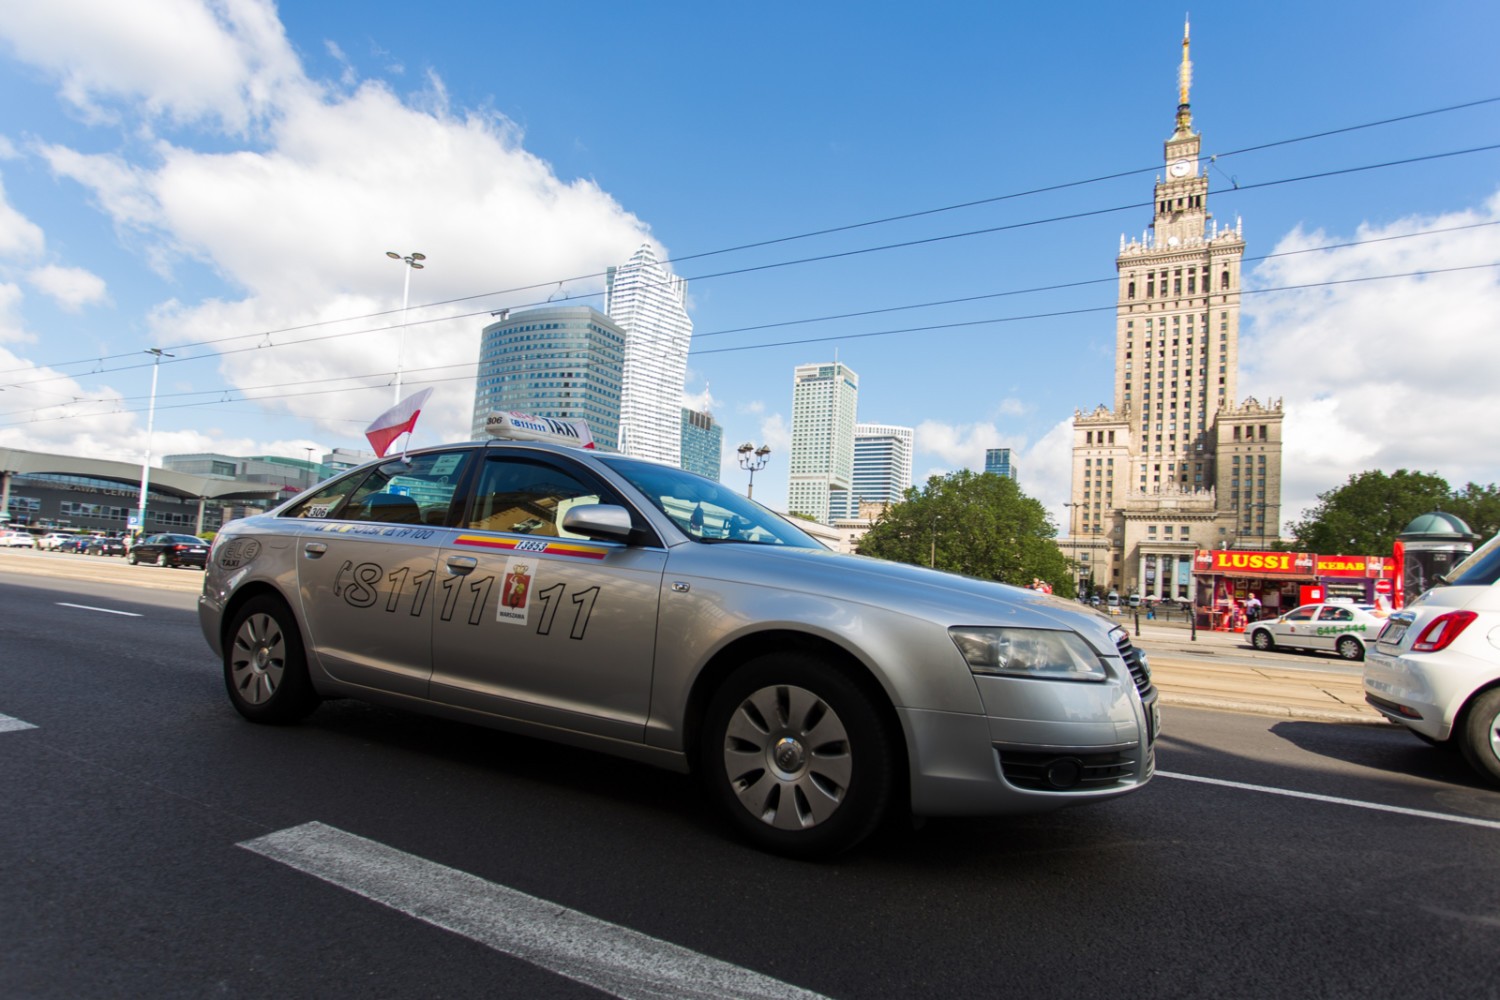 Taxi Warszawa